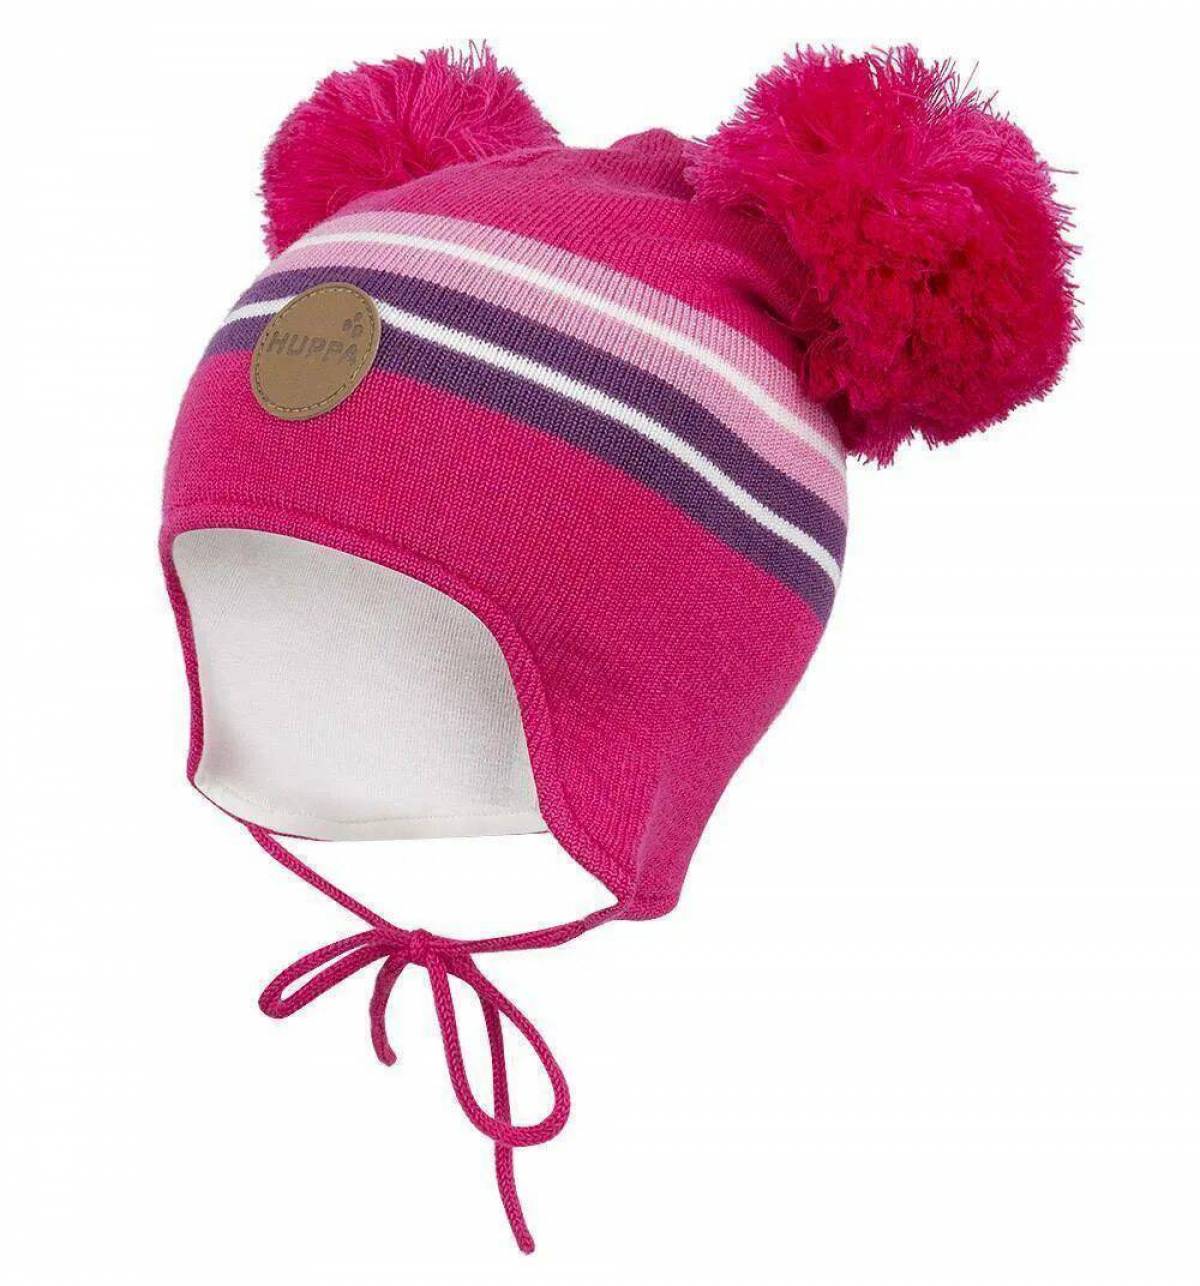 Картинка шапка. Шапка Huppa цвет: розовый. Шапка-бини Huppa. Детские шапки для девочек Хуппа. Хуппа шапка розовая шлем с помпоном.